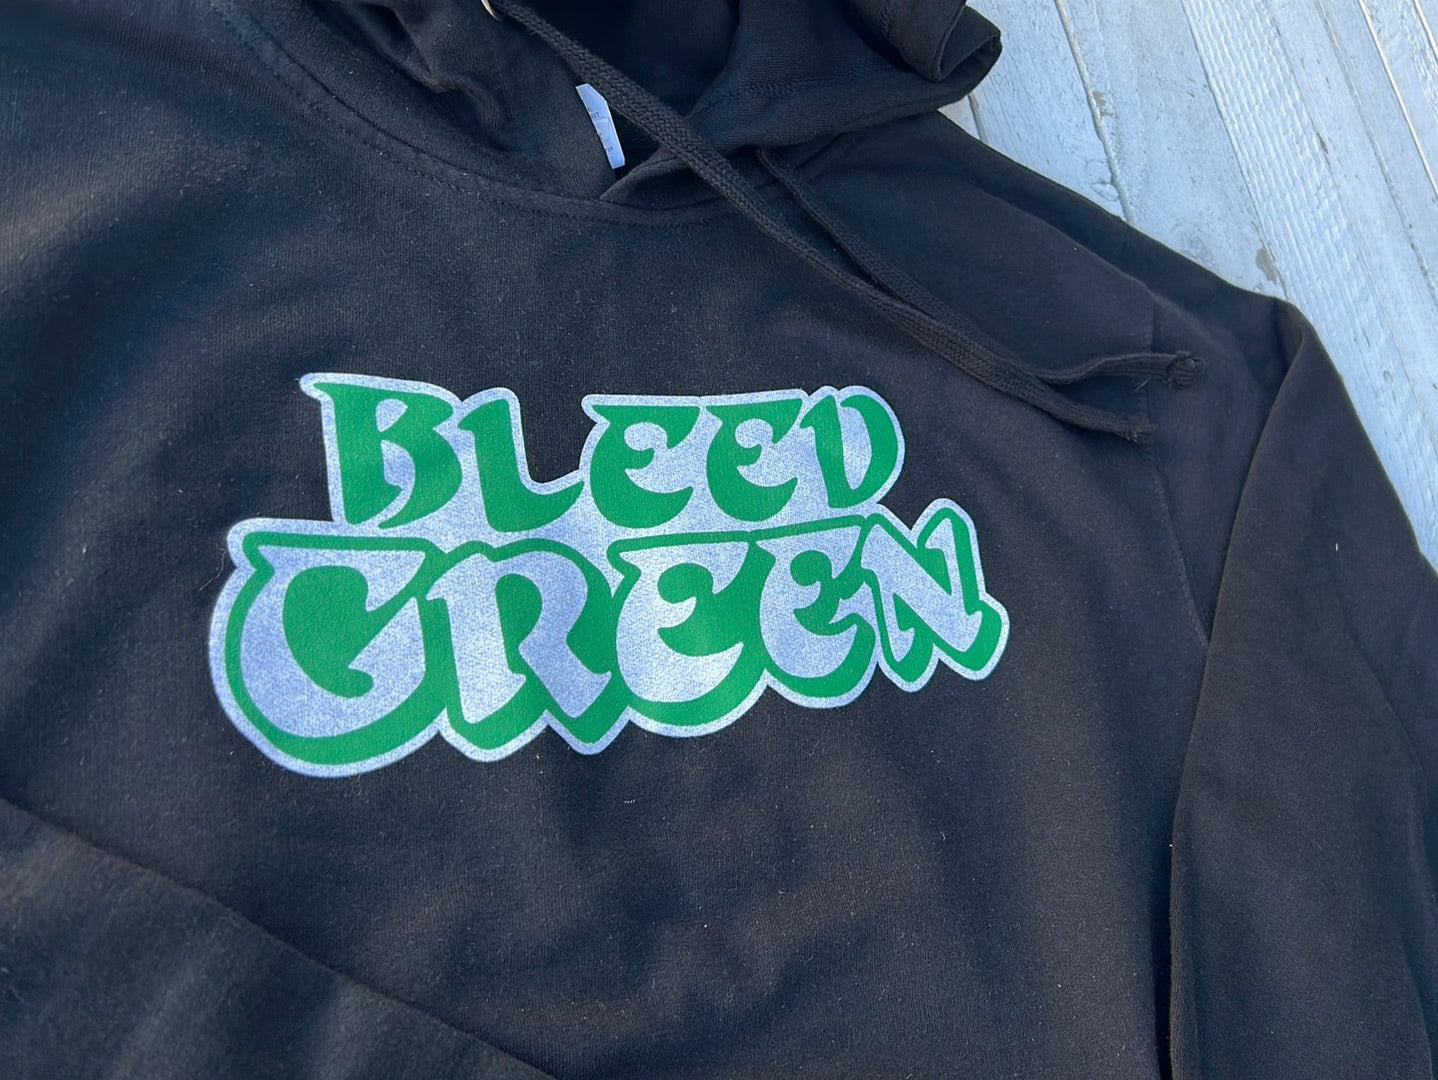 BlueRooted Bleed Green Black Sweatshirt